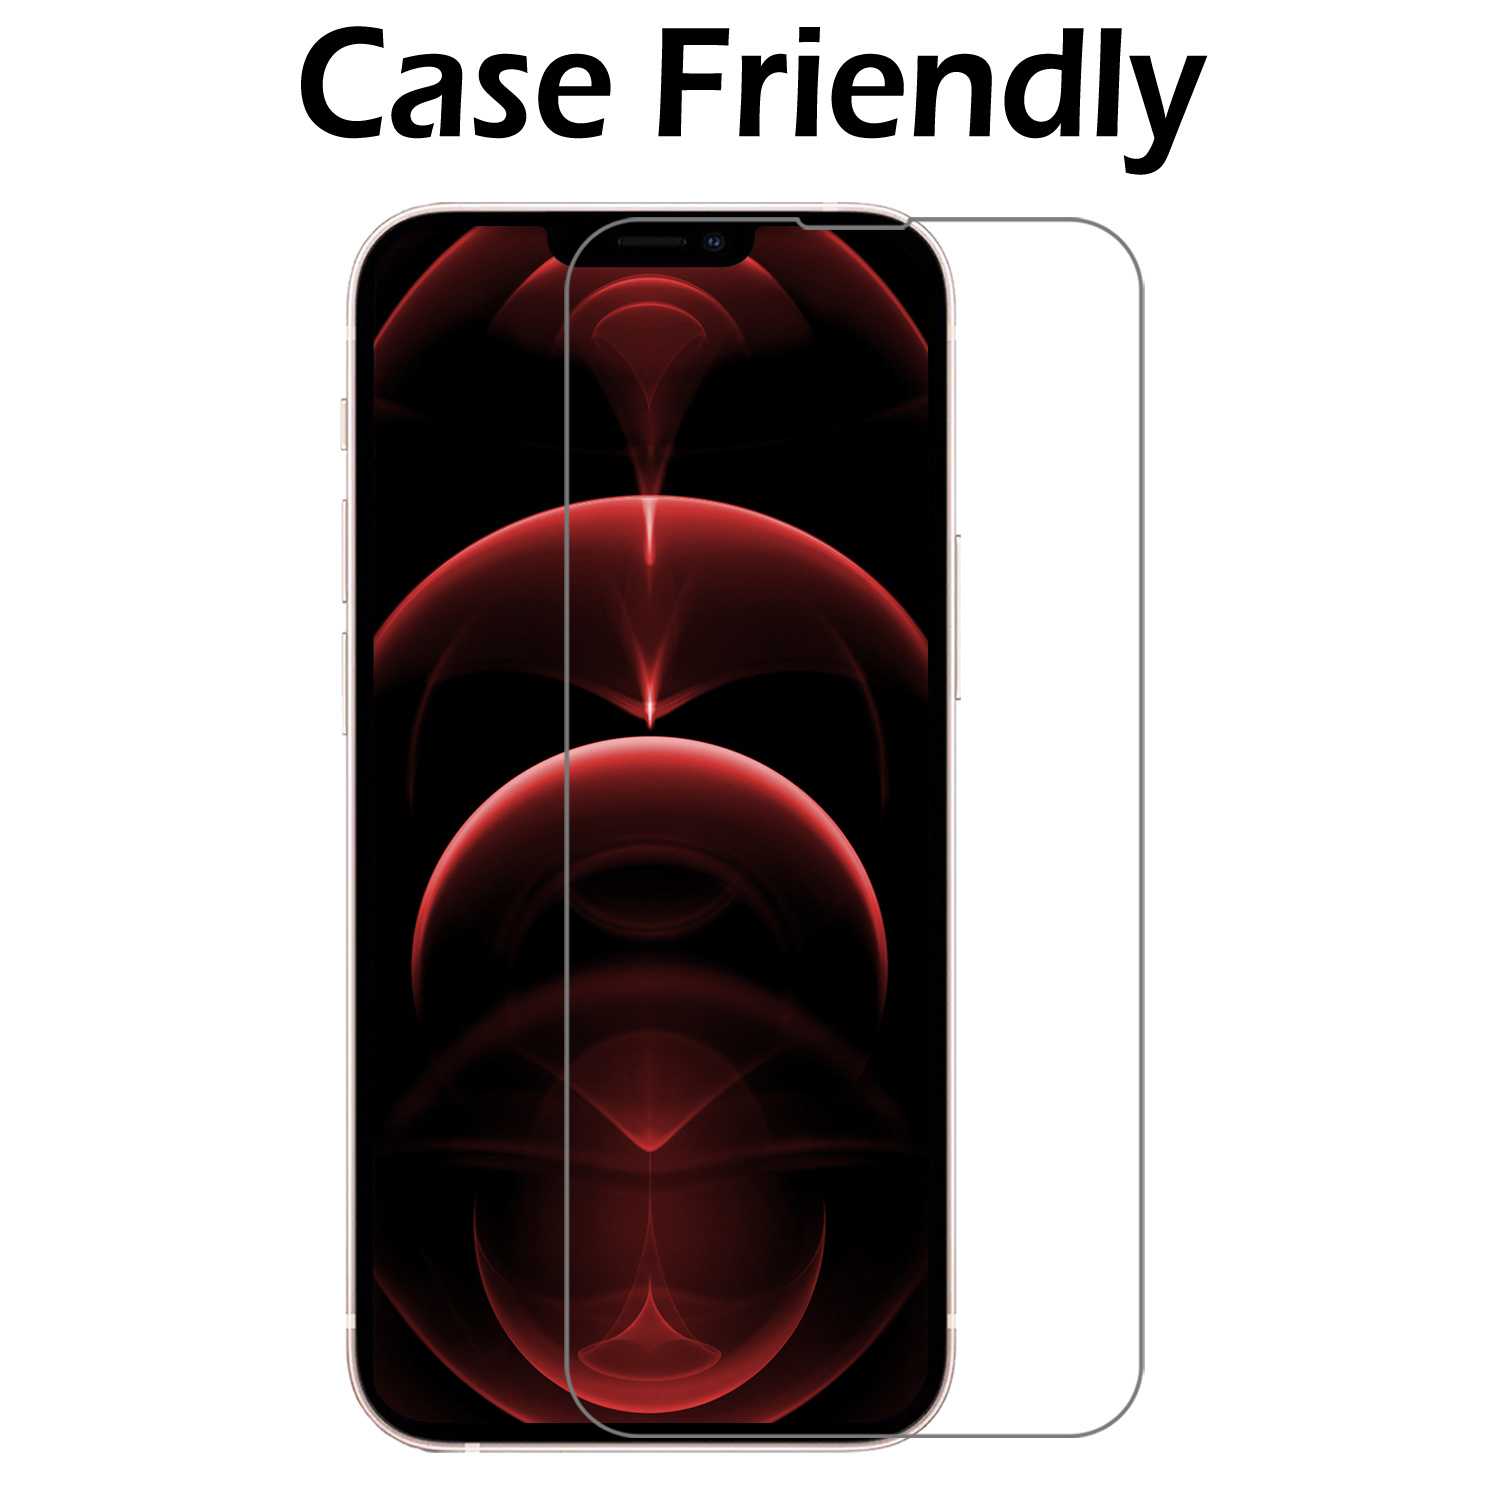 Nomfy Hoes voor iPhone 14 Pro Max Hoesje Book Case Hoes Flip Cover Bookcase Met Screenprotector - Rose Goud